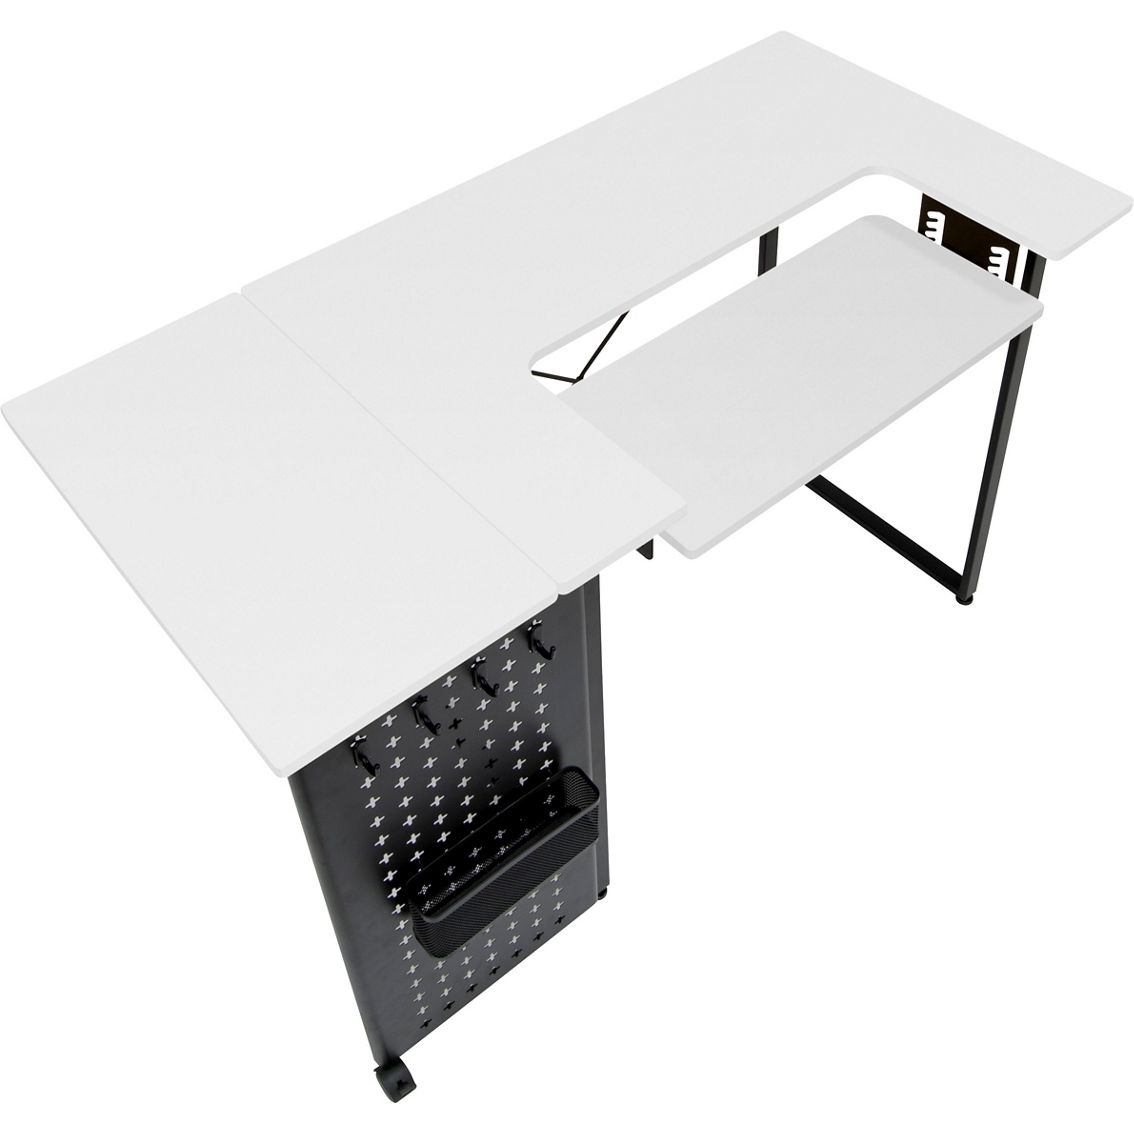 Studio Designs Pivot Panel Sewing Table, White - Image 3 of 9